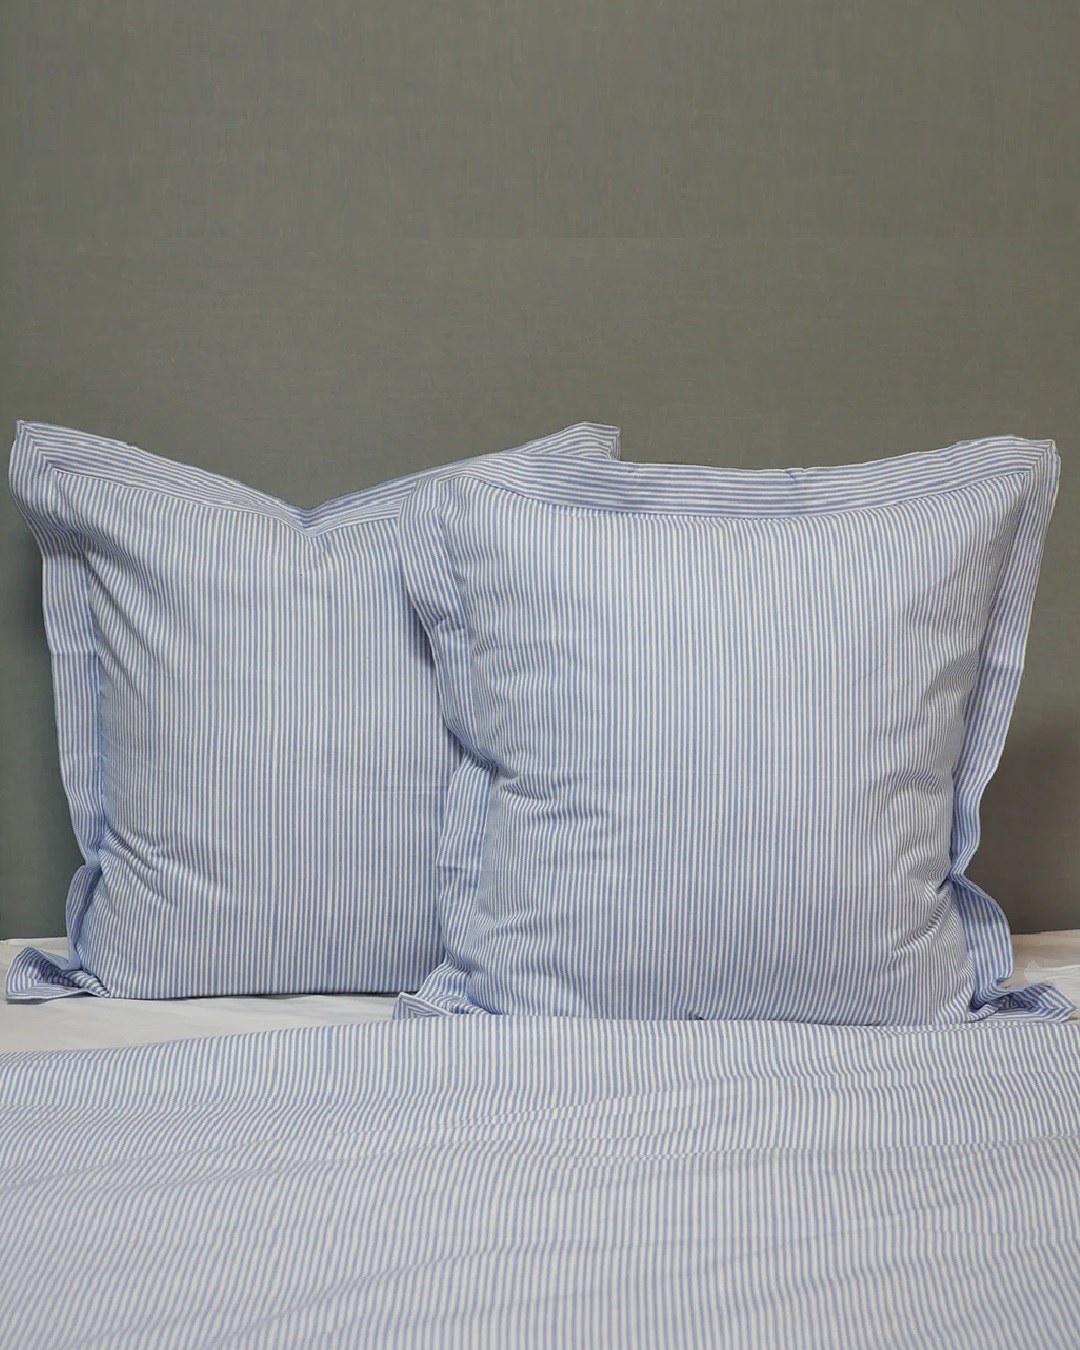 Blue stripe euro pillows on bed